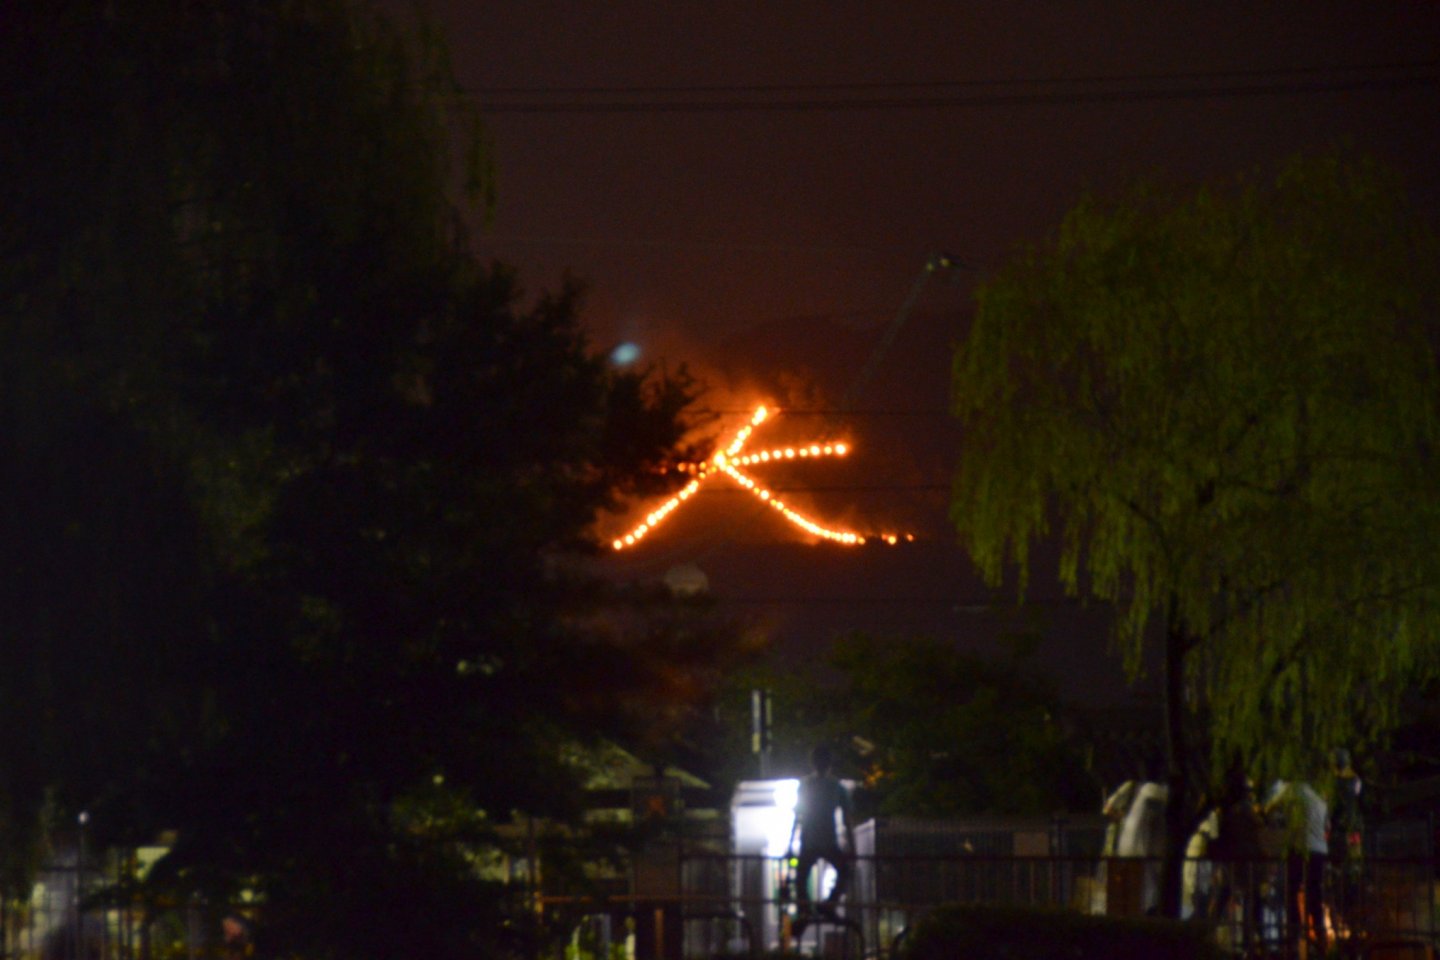 The Kanji character symbolising "Large" being set ablaze on the Daimonji mountain.